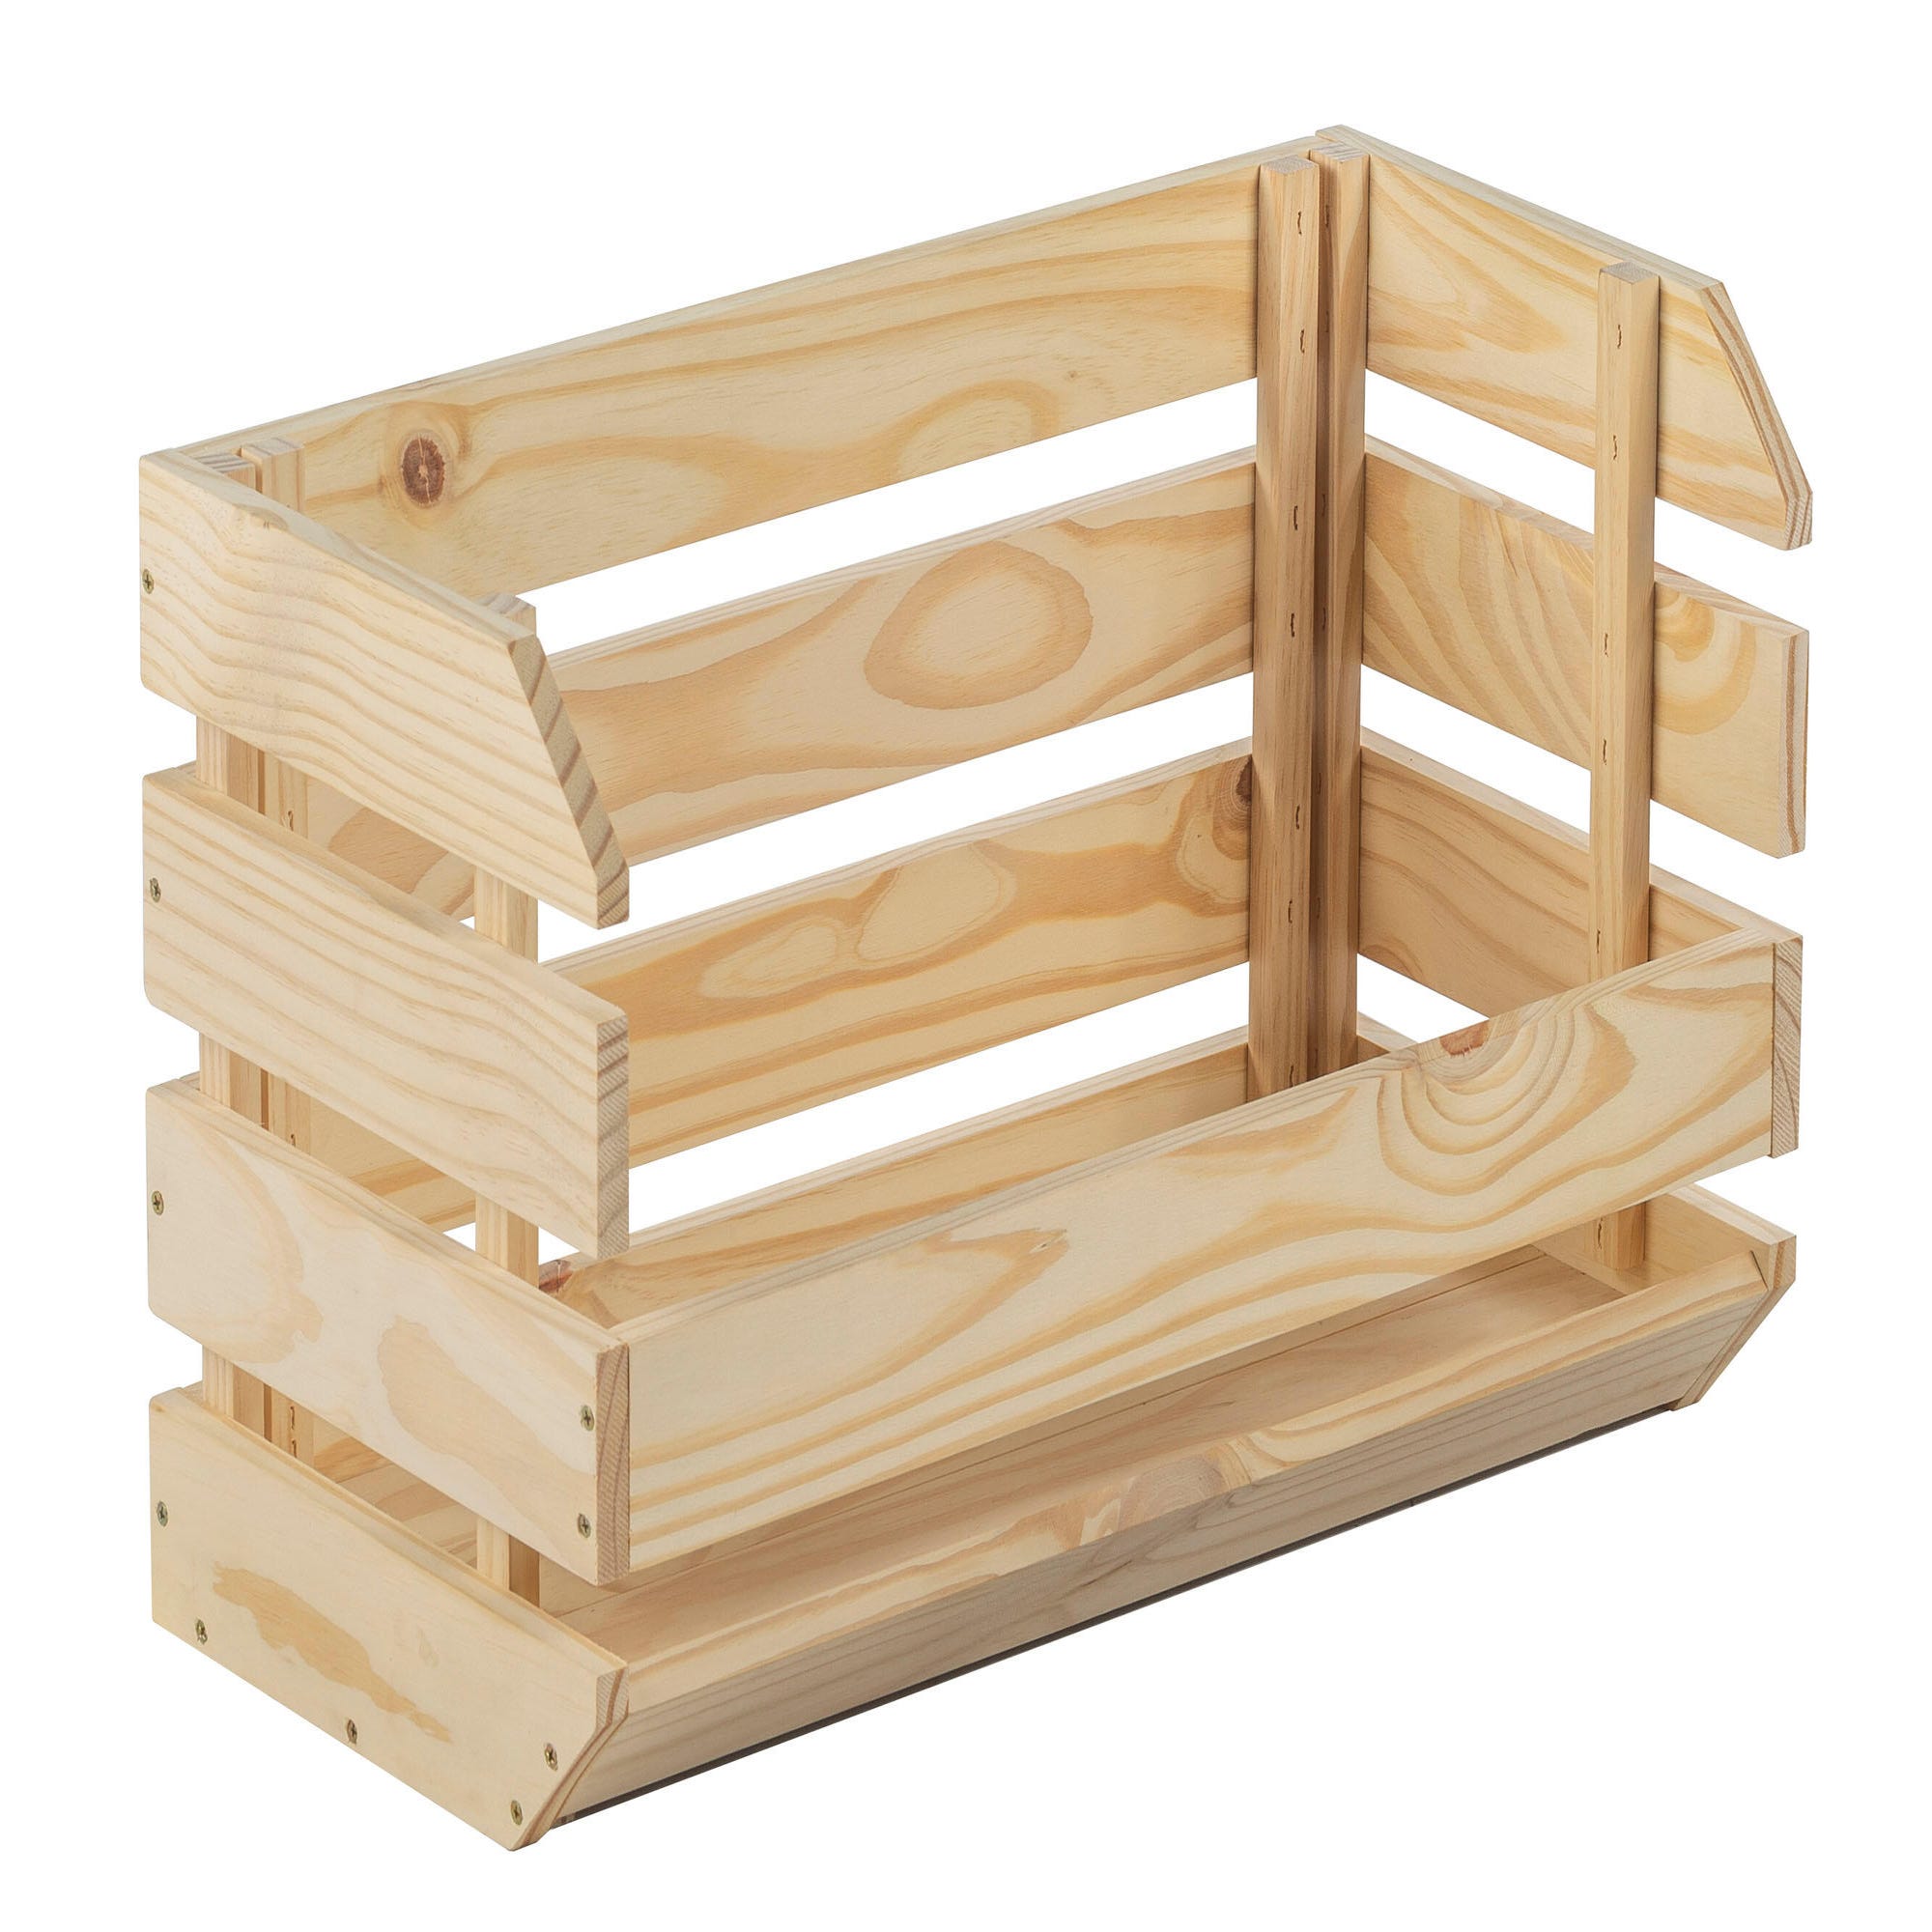 Caja de madera GRANDE árbol - Alquiler